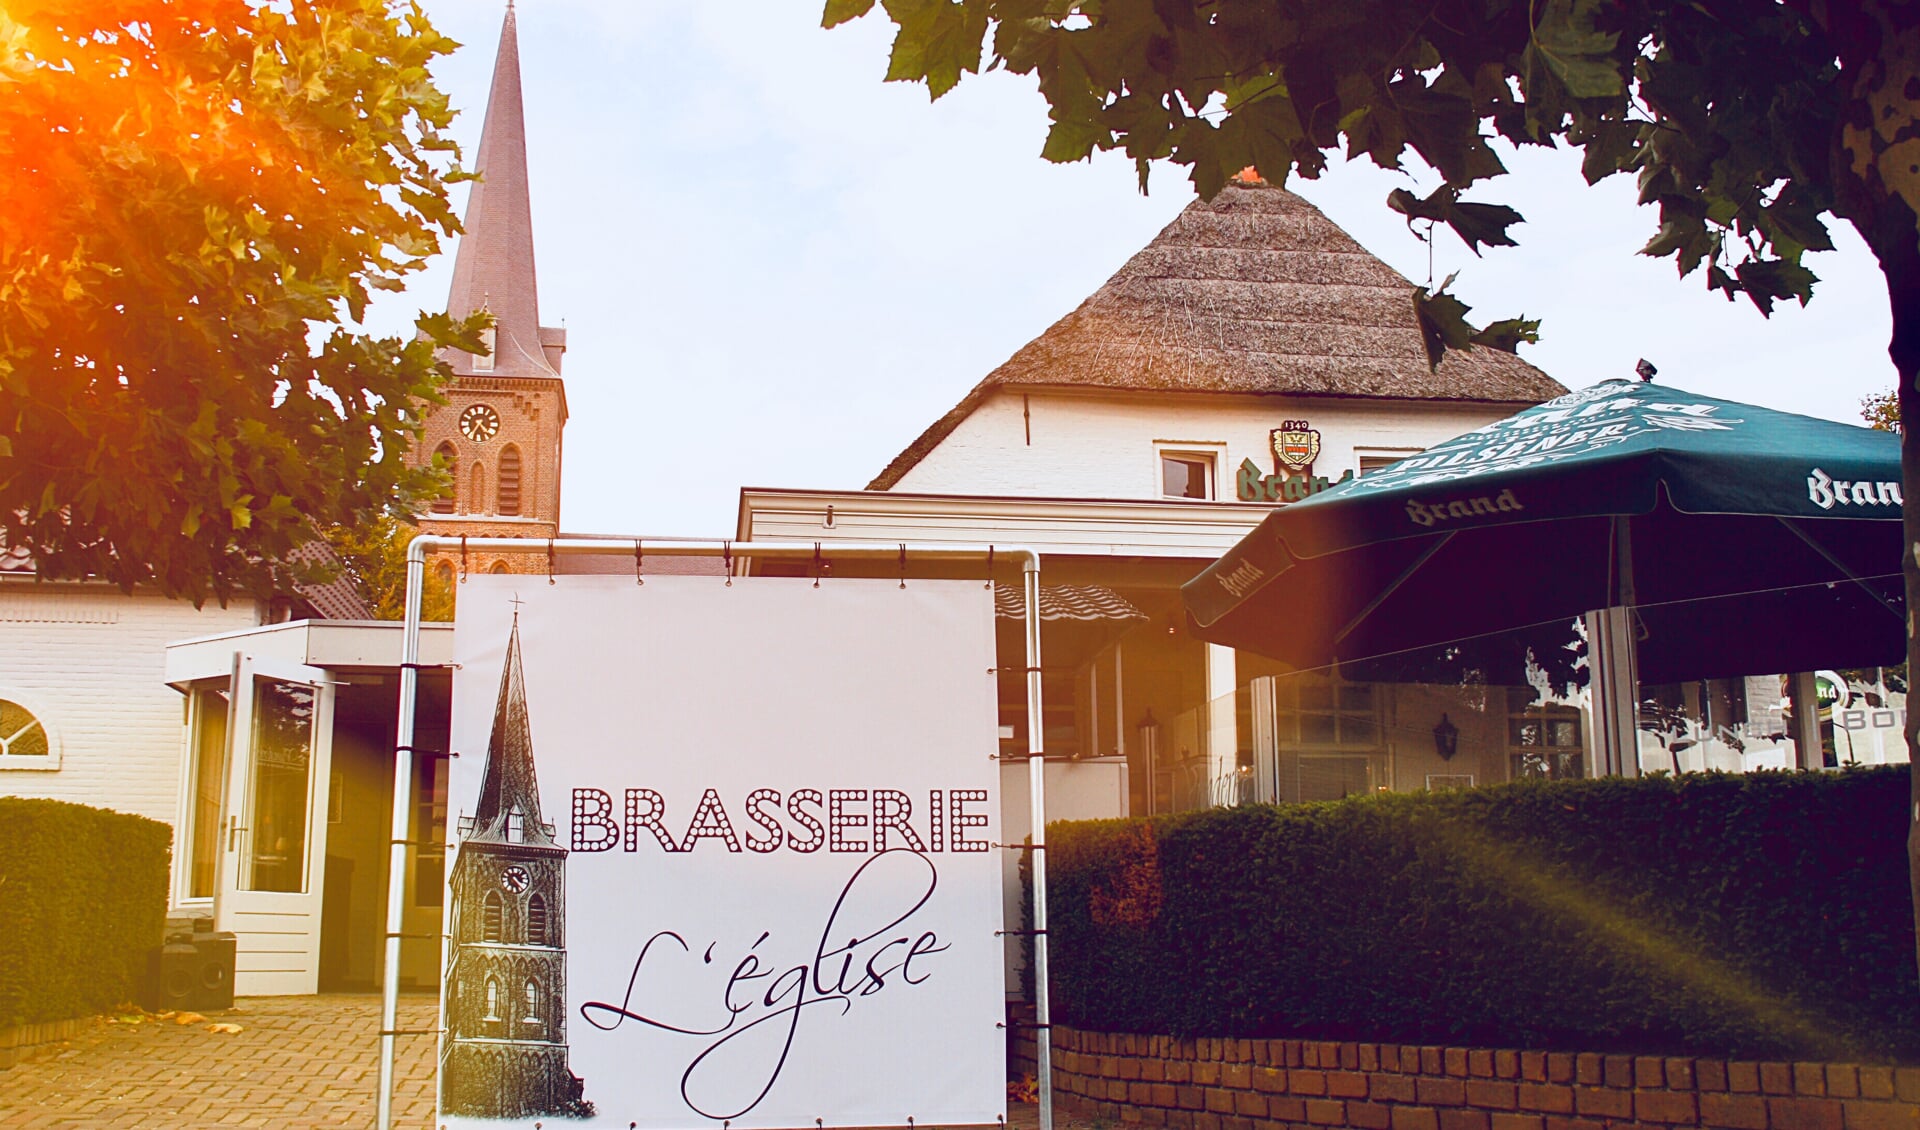 Brasserie L' église & Feesterij 't Vunderke.